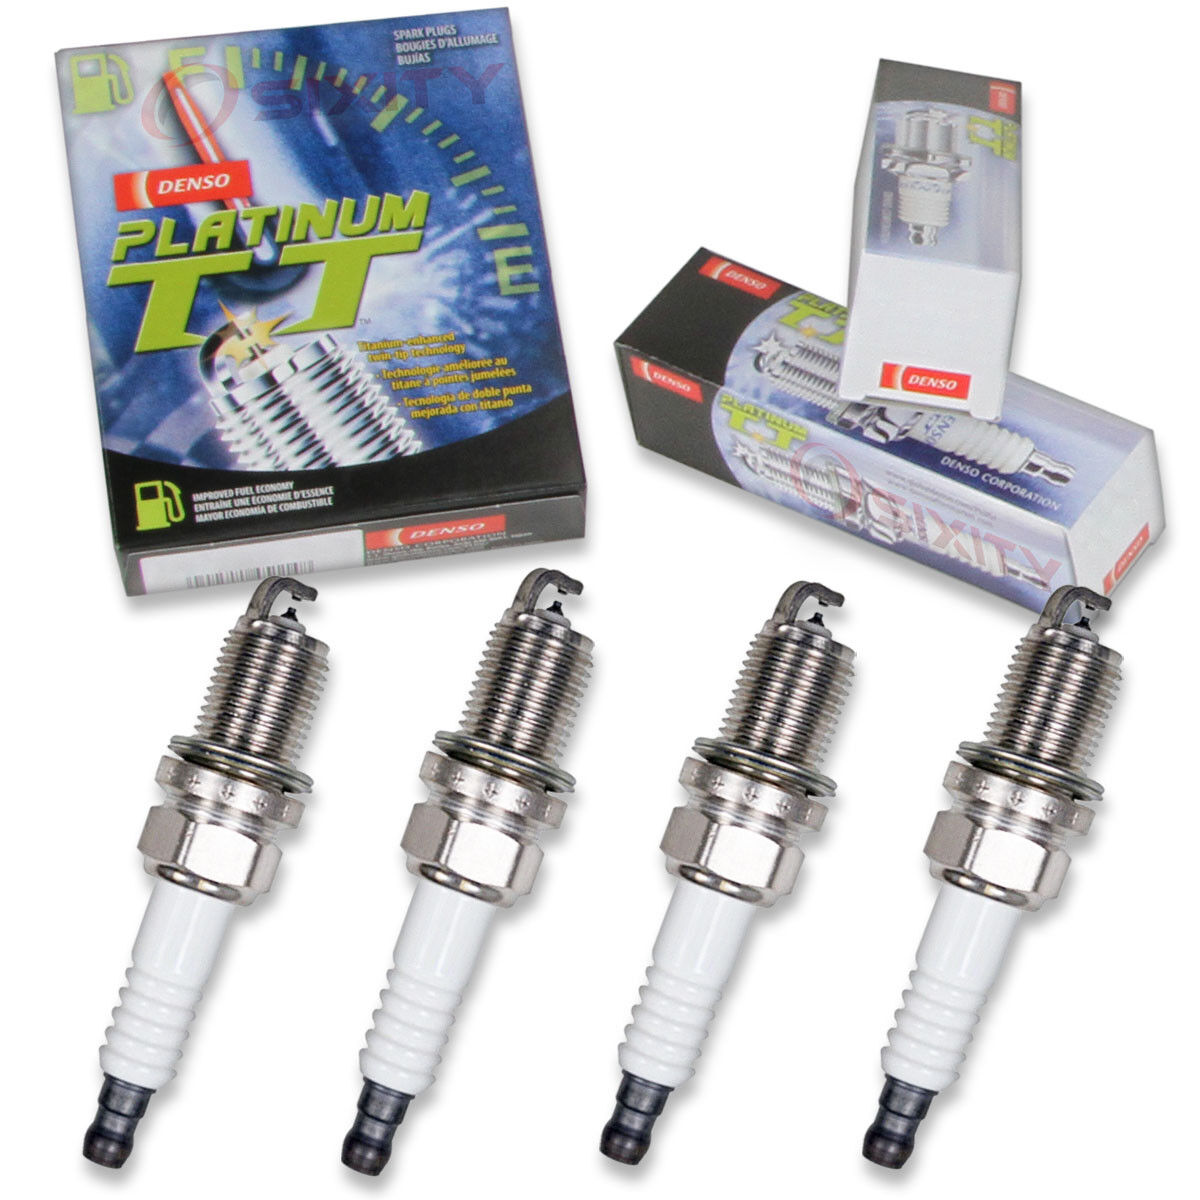 4 pc Denso Platinum TT Spark Plugs for 1992-2011 Toyota Camry 2.2L 2.4L L4 xd